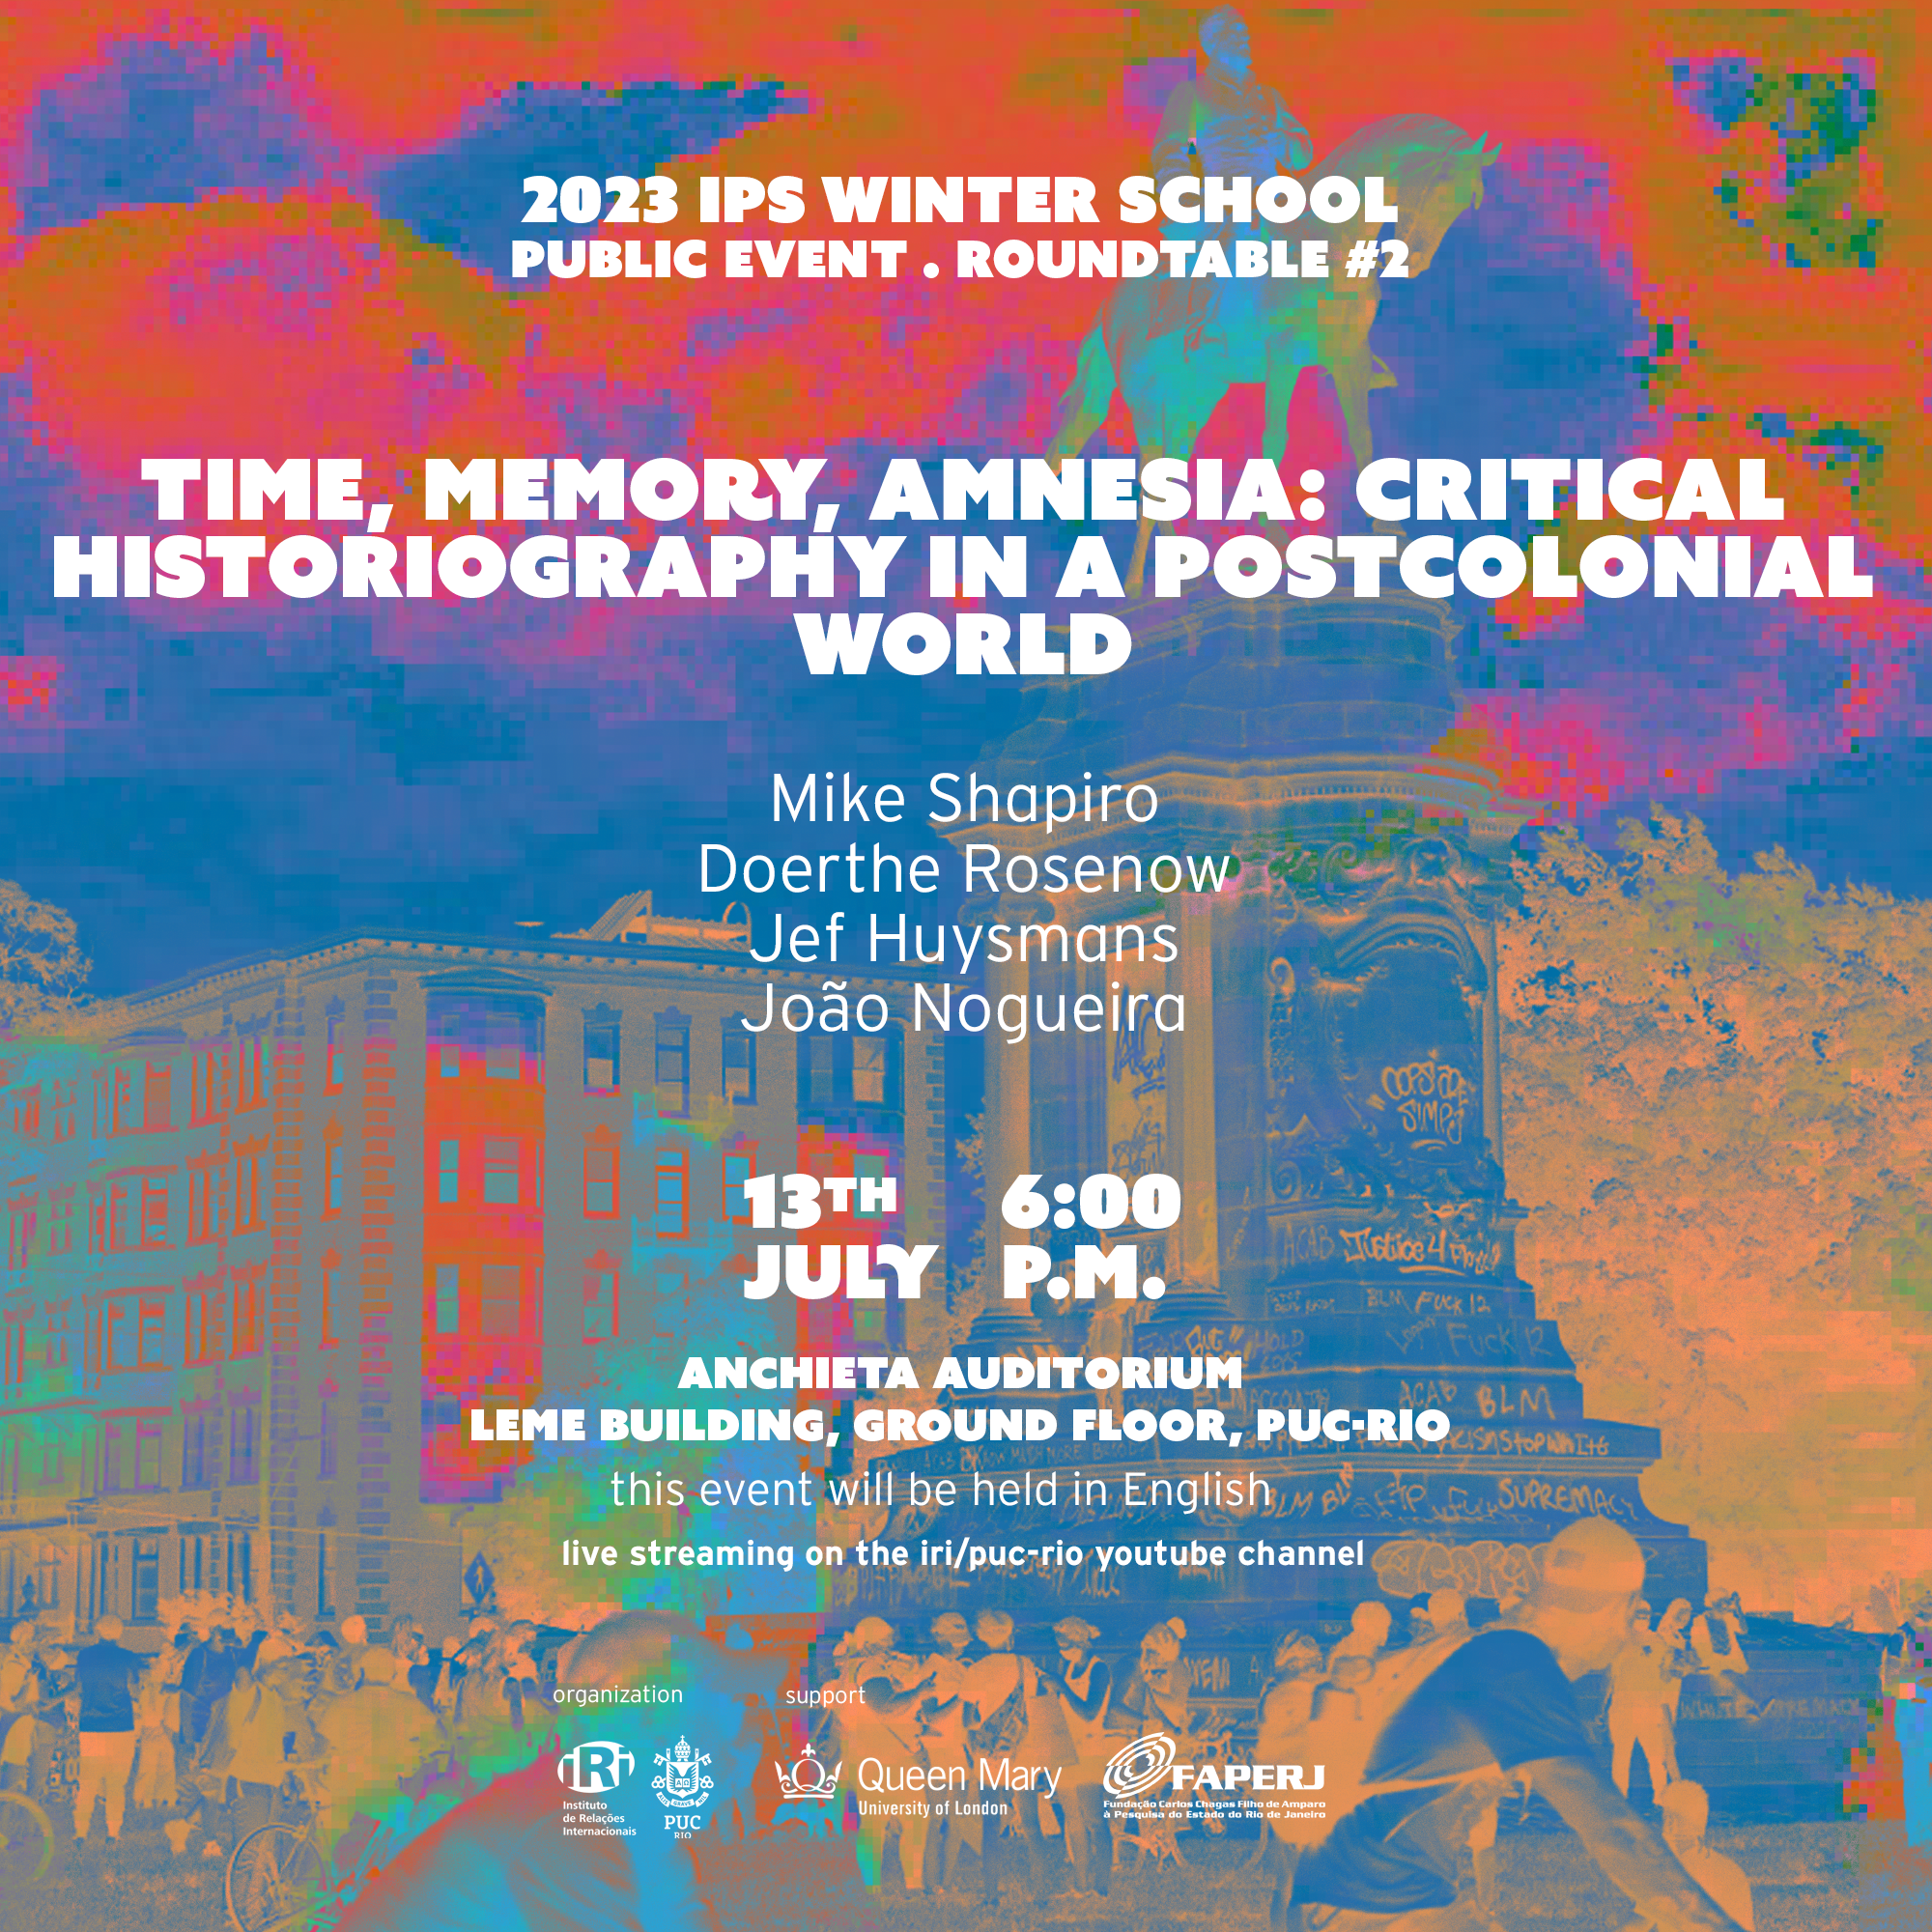 Evento aberto da Escola de Inverno IPS 2023 | Time, memory and amnesia: Critical historiography in a post-colonial world